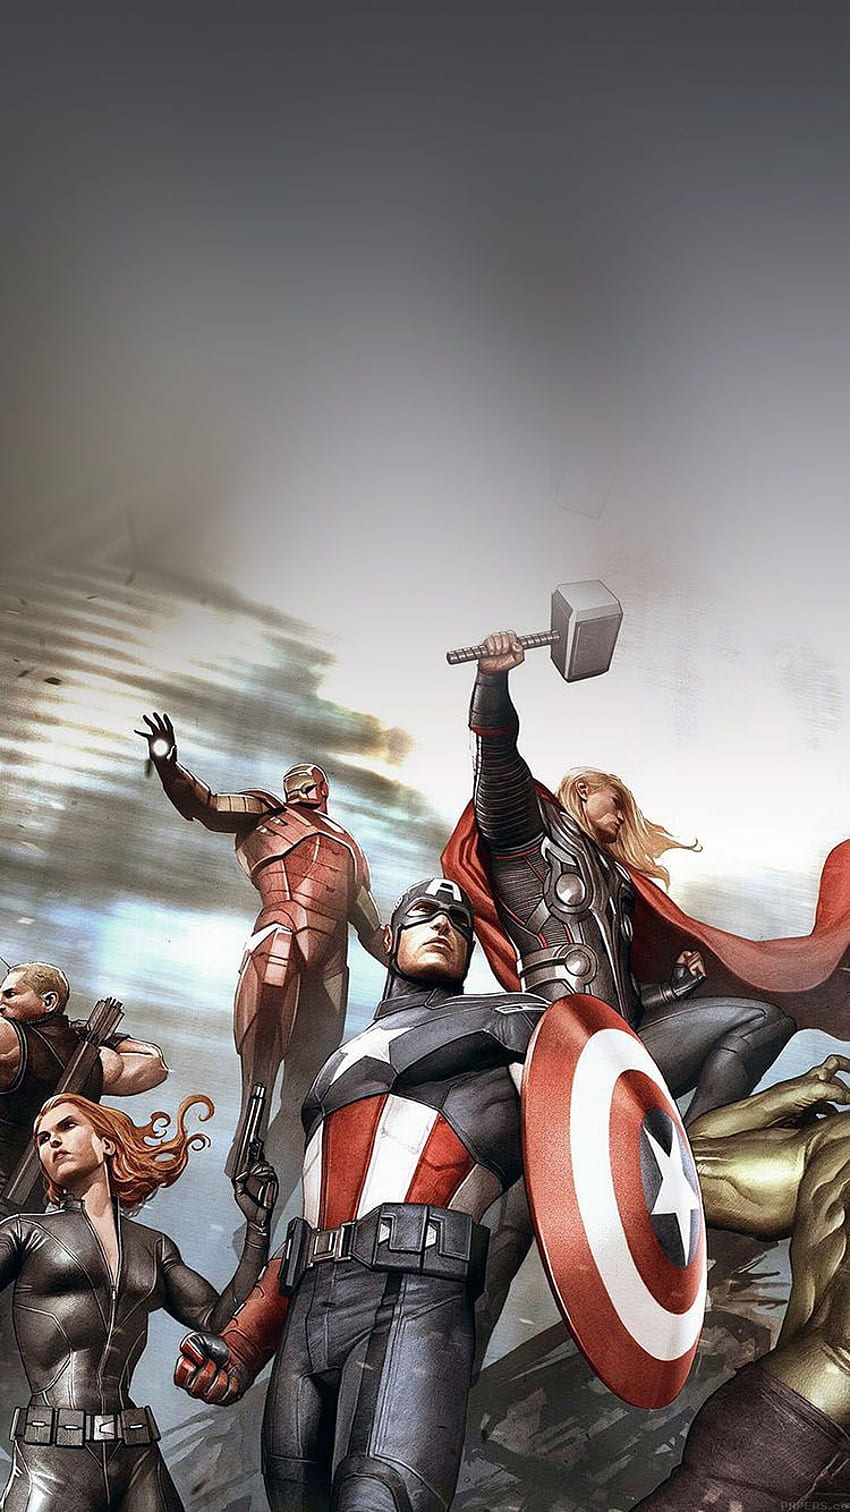 Ƒ↑TAP DAN DAPATKAN APLIKASINYA! Untuk Geeks Film & Musik Avengers Hulk Iron Man Captain America Thor Bla. capitao amerika, Vingadores, Plano de fundo iphone, LEGO Marvel wallpaper ponsel HD